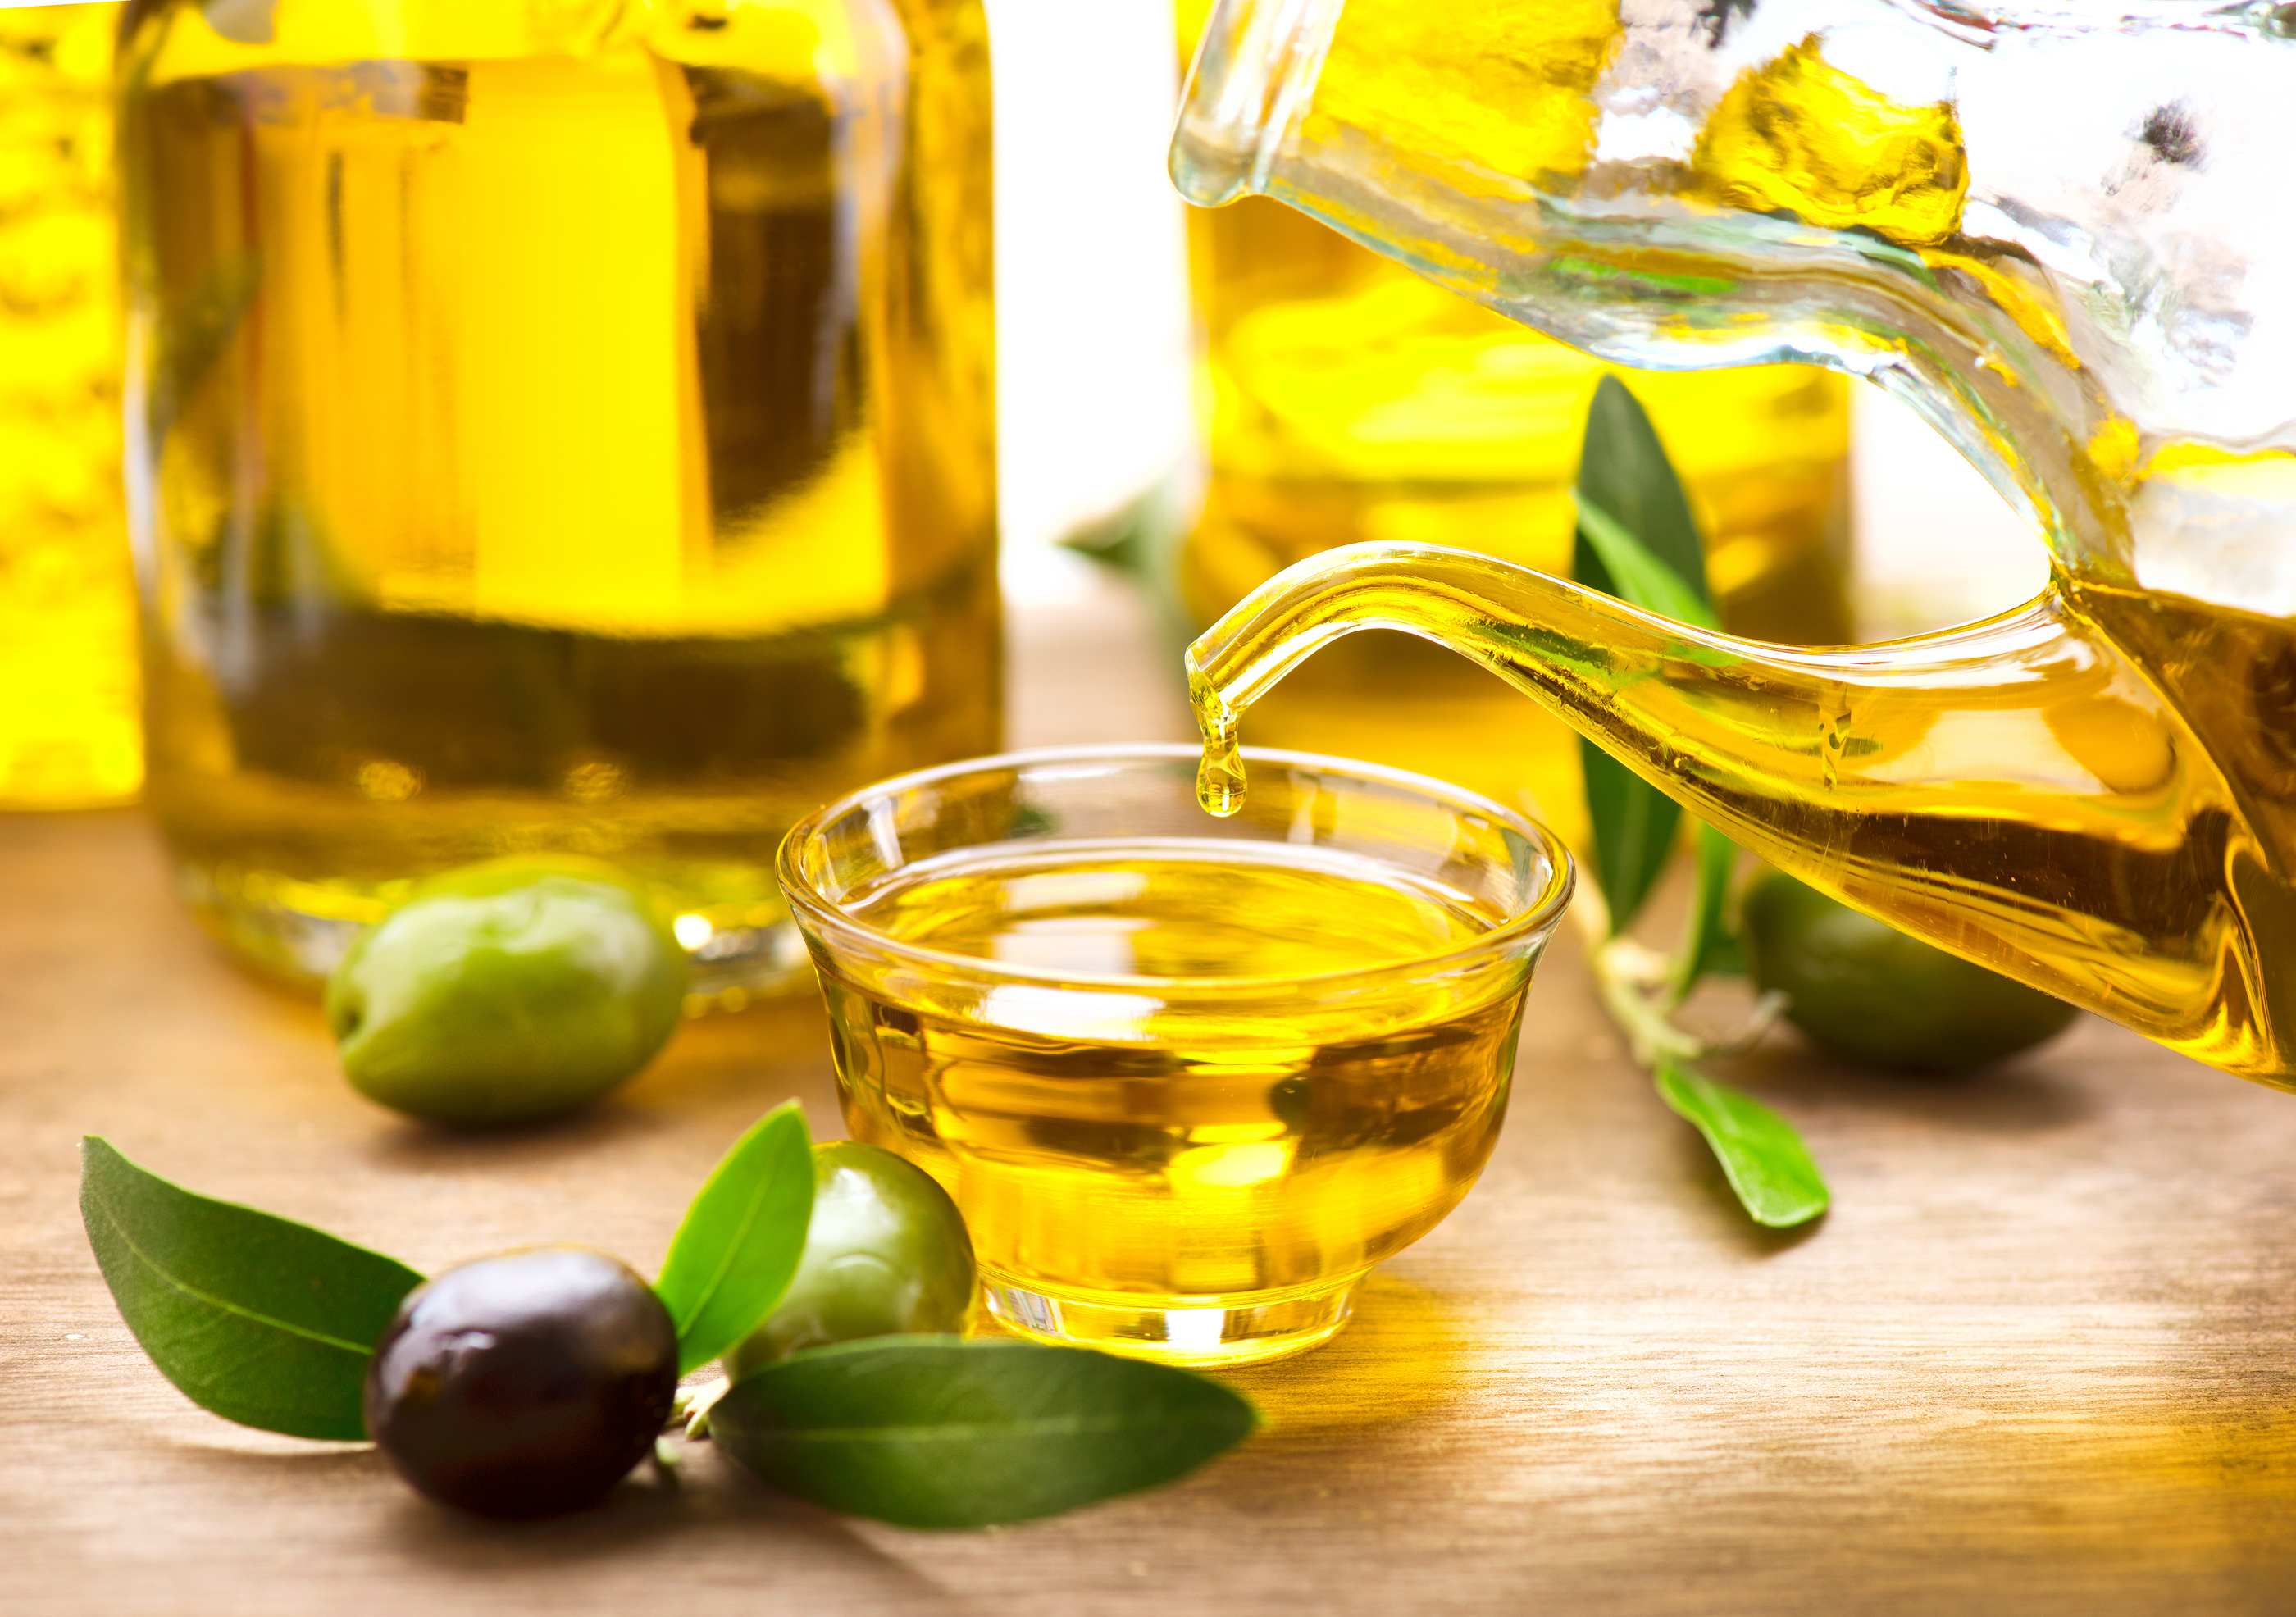 Олив Ойл масло оливковое. Масло оливковое natural Olive Oil. Оливки и оливковое масло. Рыбий жир, оливковое масло.